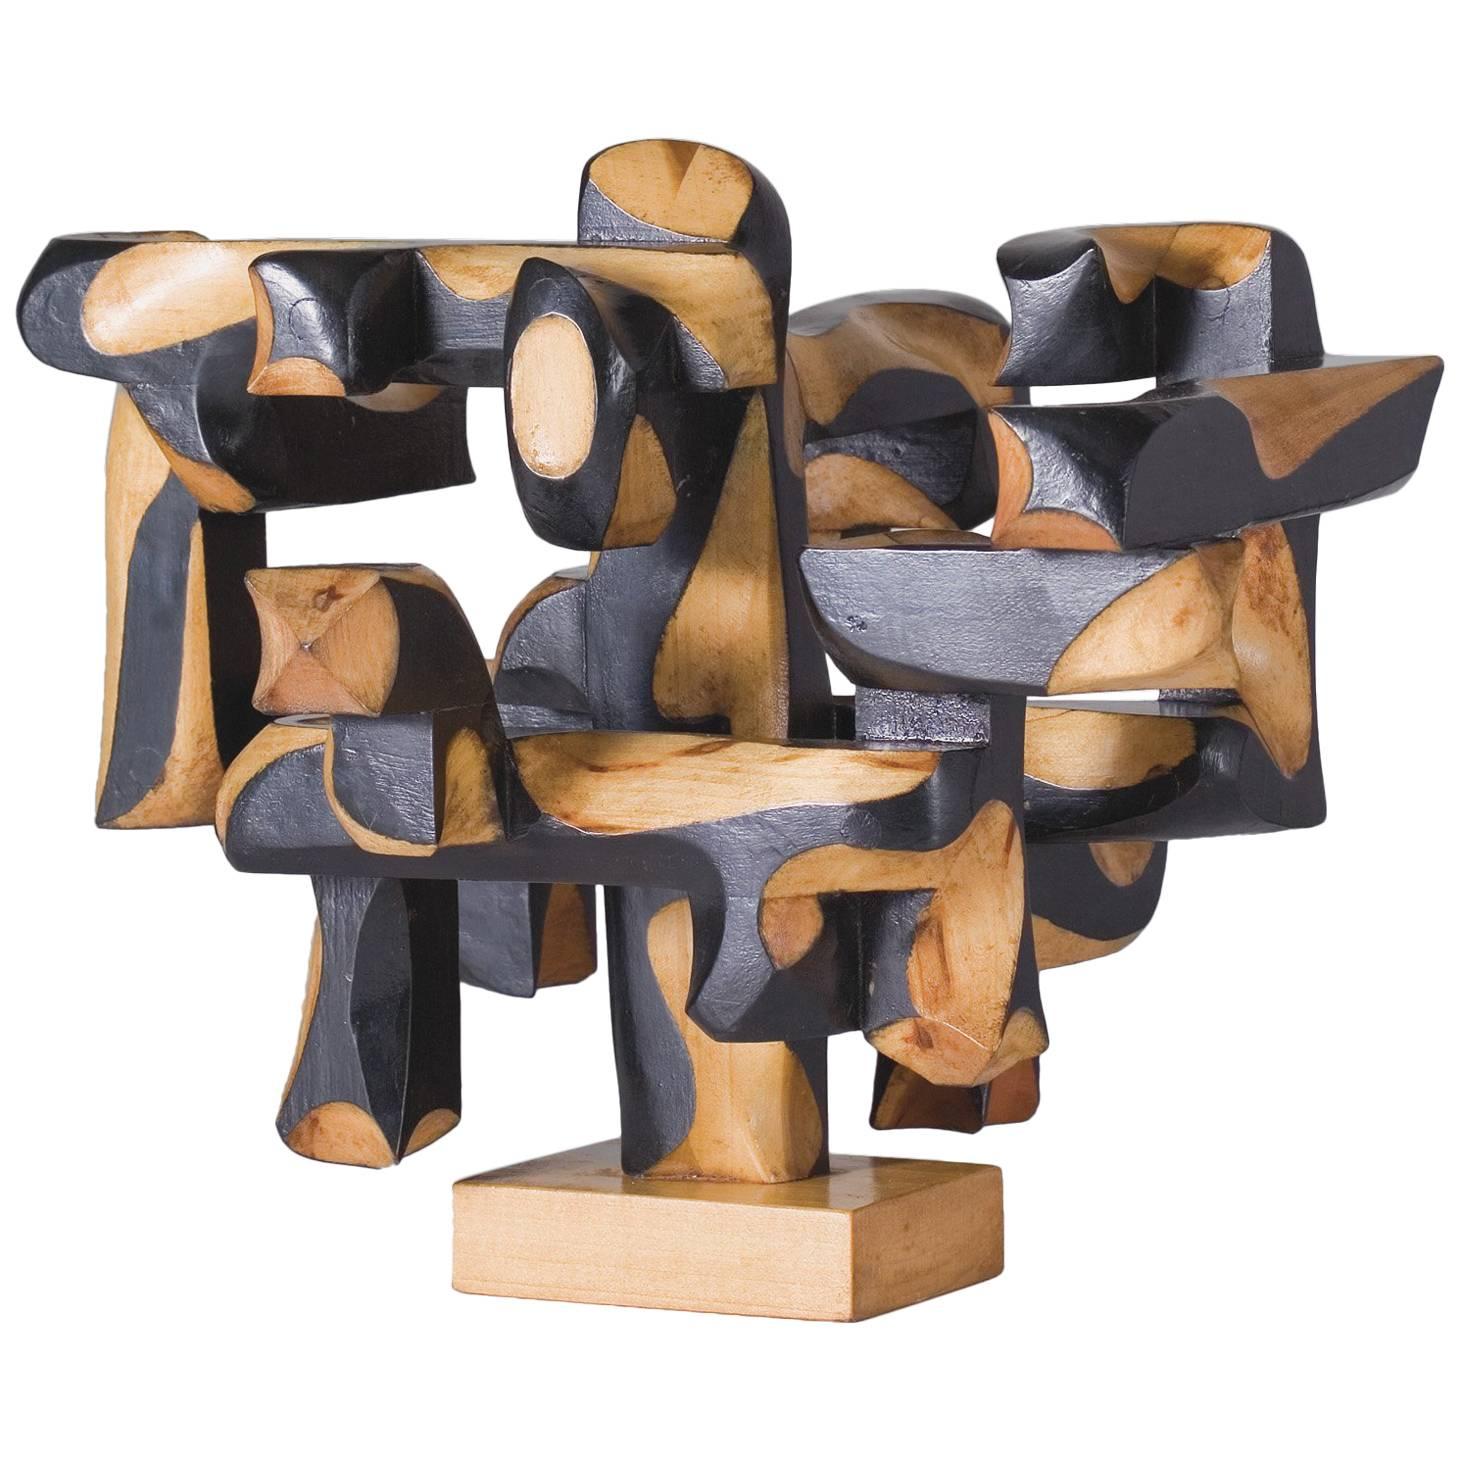 Mario Dal Fabbro, "No. 20" Wood Sculpture, United States, C. 1980